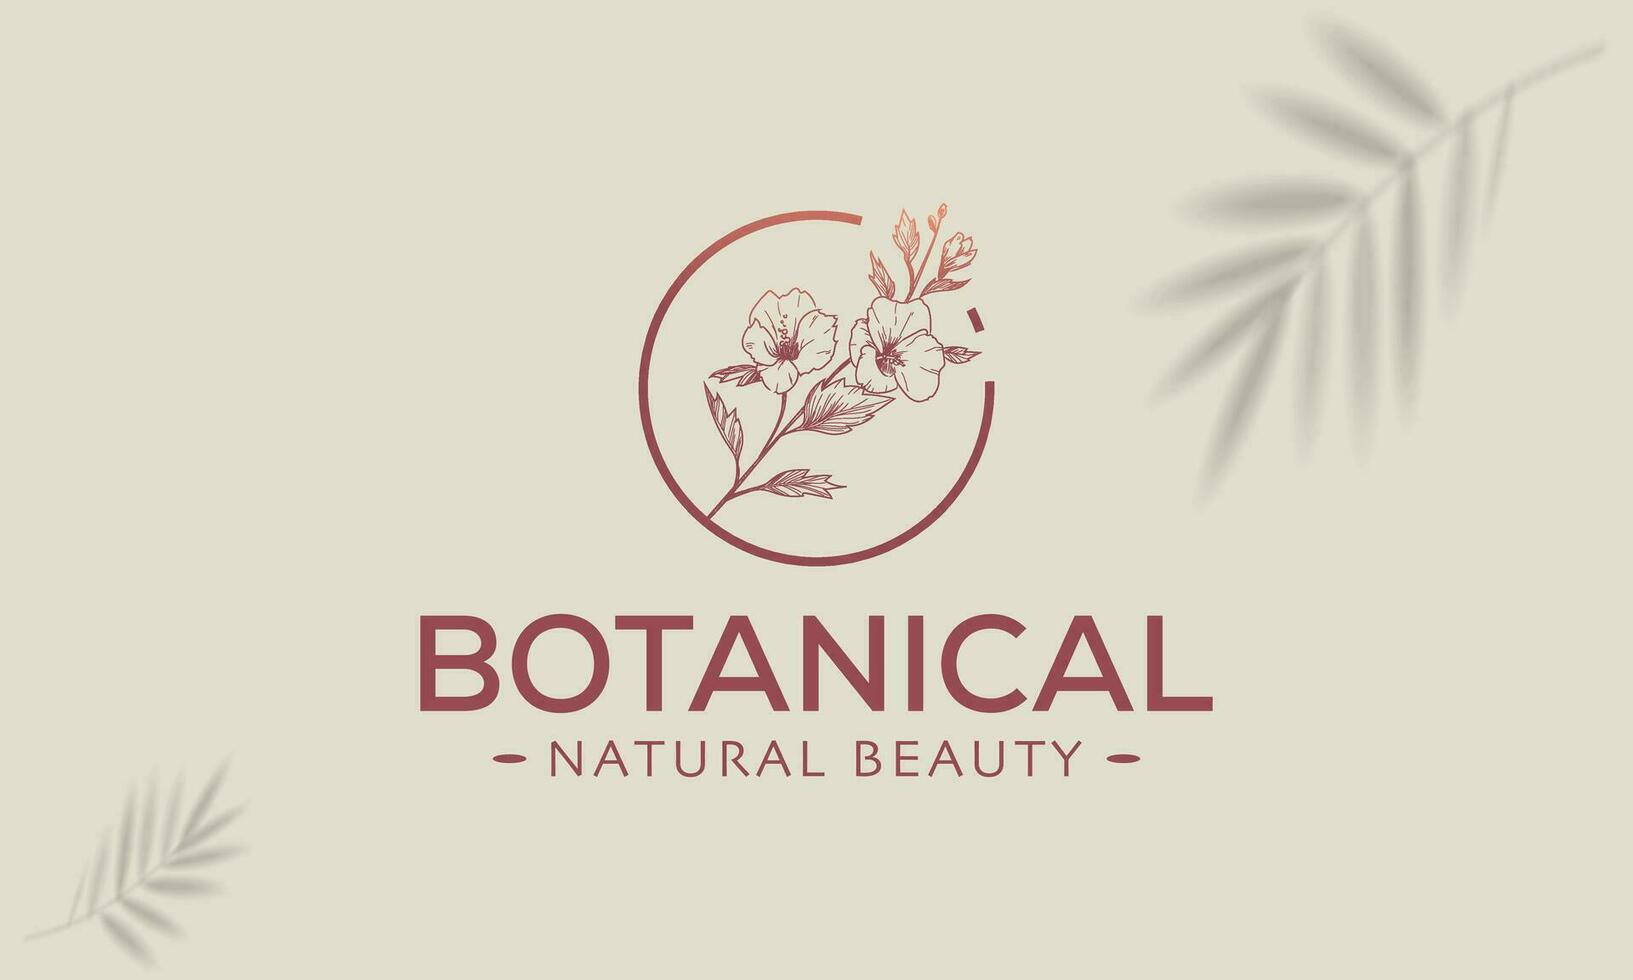 floral elemento mano dibujado botánico logo con salvaje flor vector